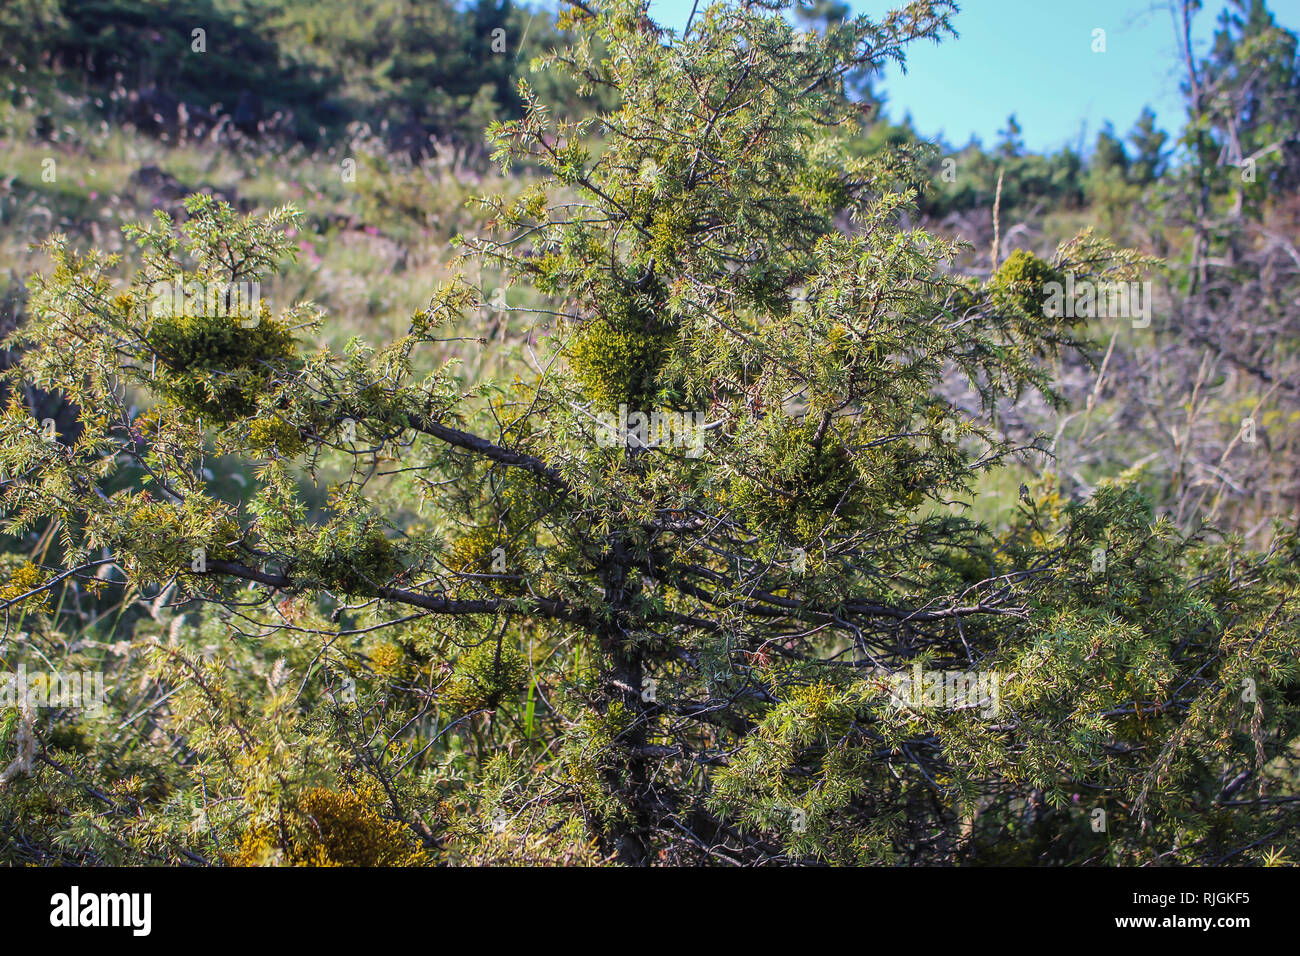 Parasitic plant Arceuthobium juniperine - dwarf mistletoes on Juniperus tree Stock Photo